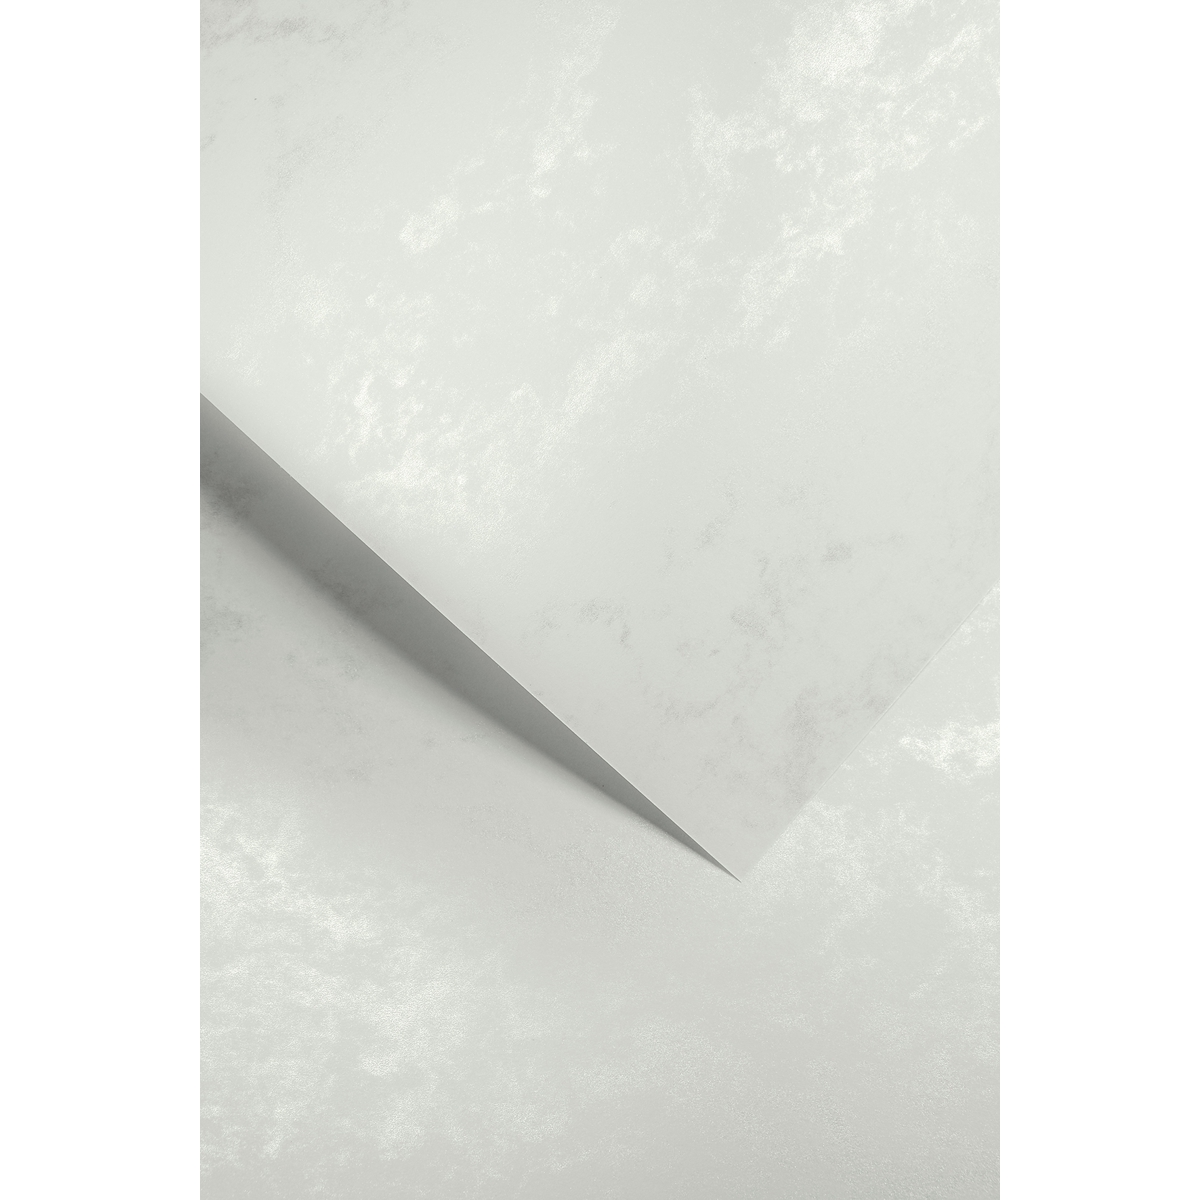 Ozdobný papír Mramor stříbrná 220g, 20ks